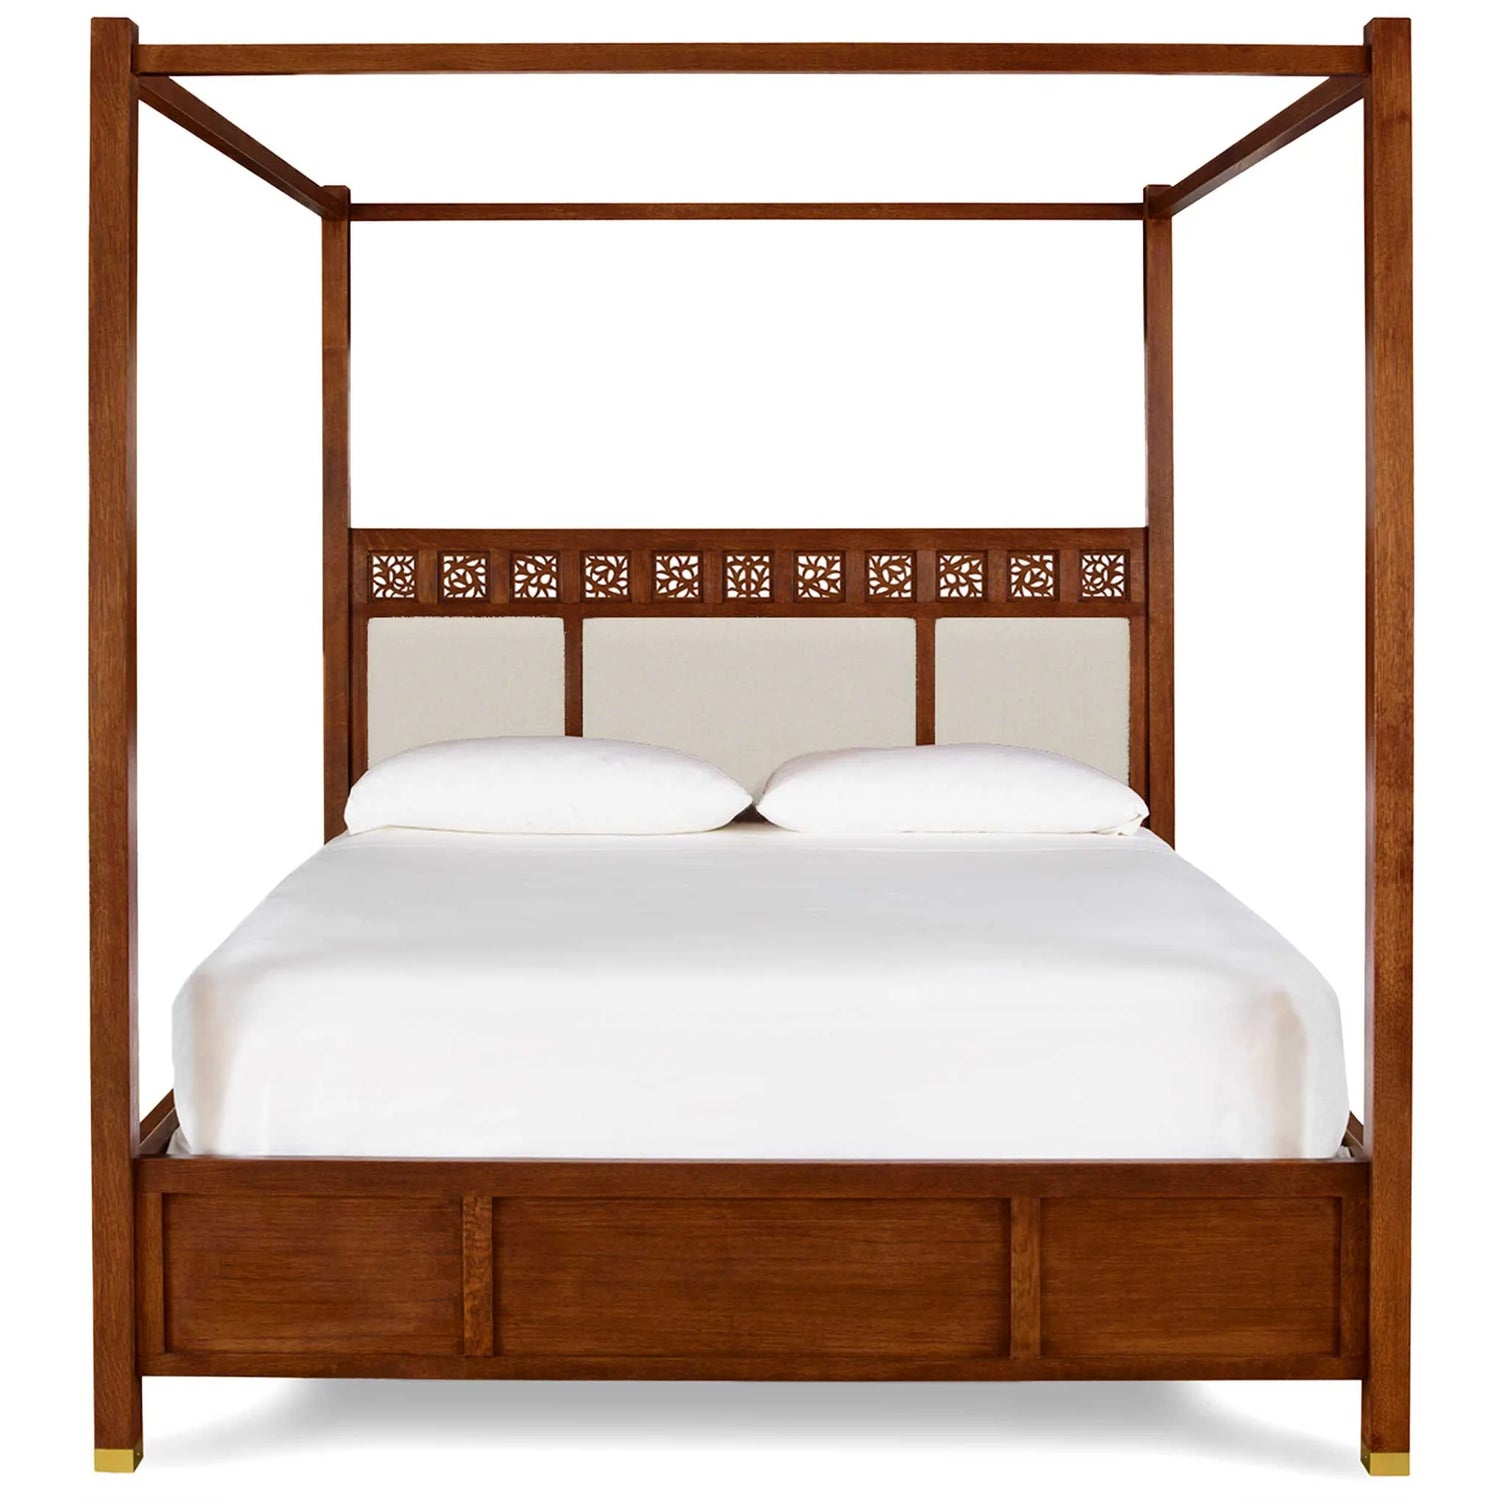 Surrey Hills Upholstered Four-Poster Bed, Cal King